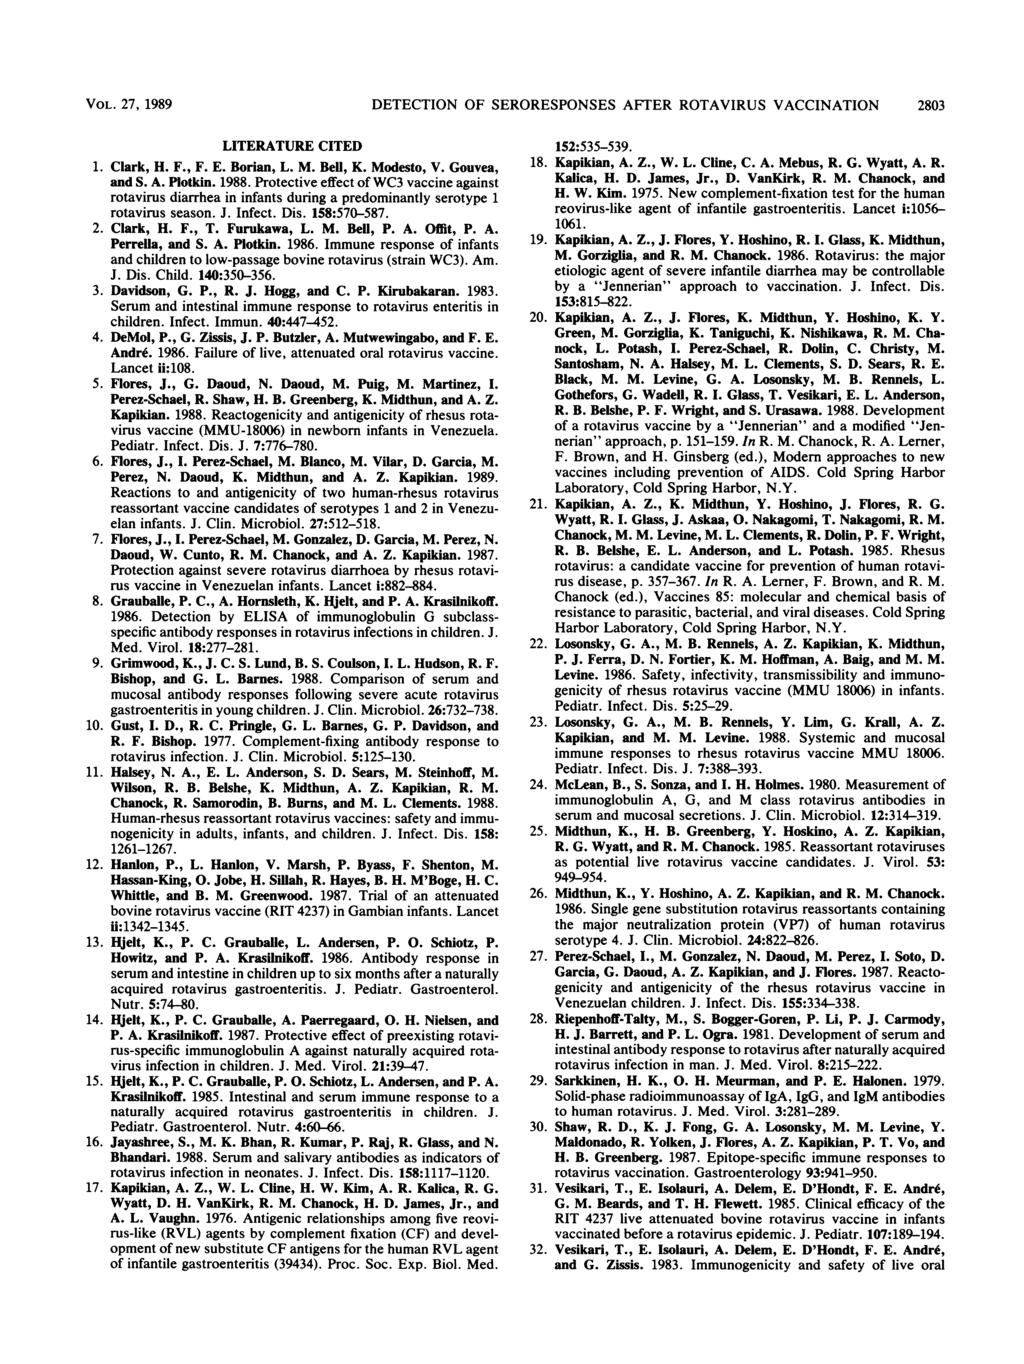 VOL. 27, 1989 DETECTION OF SERORESPONSES AFTER ROTAVIRUS VACCINATION 2803 LITERATURE CITED 1. Clark, H. F., F. E. Borian, L. M. Bell, K. Modesto, V. Gouvea, and S. A. Plotkin. 1988.